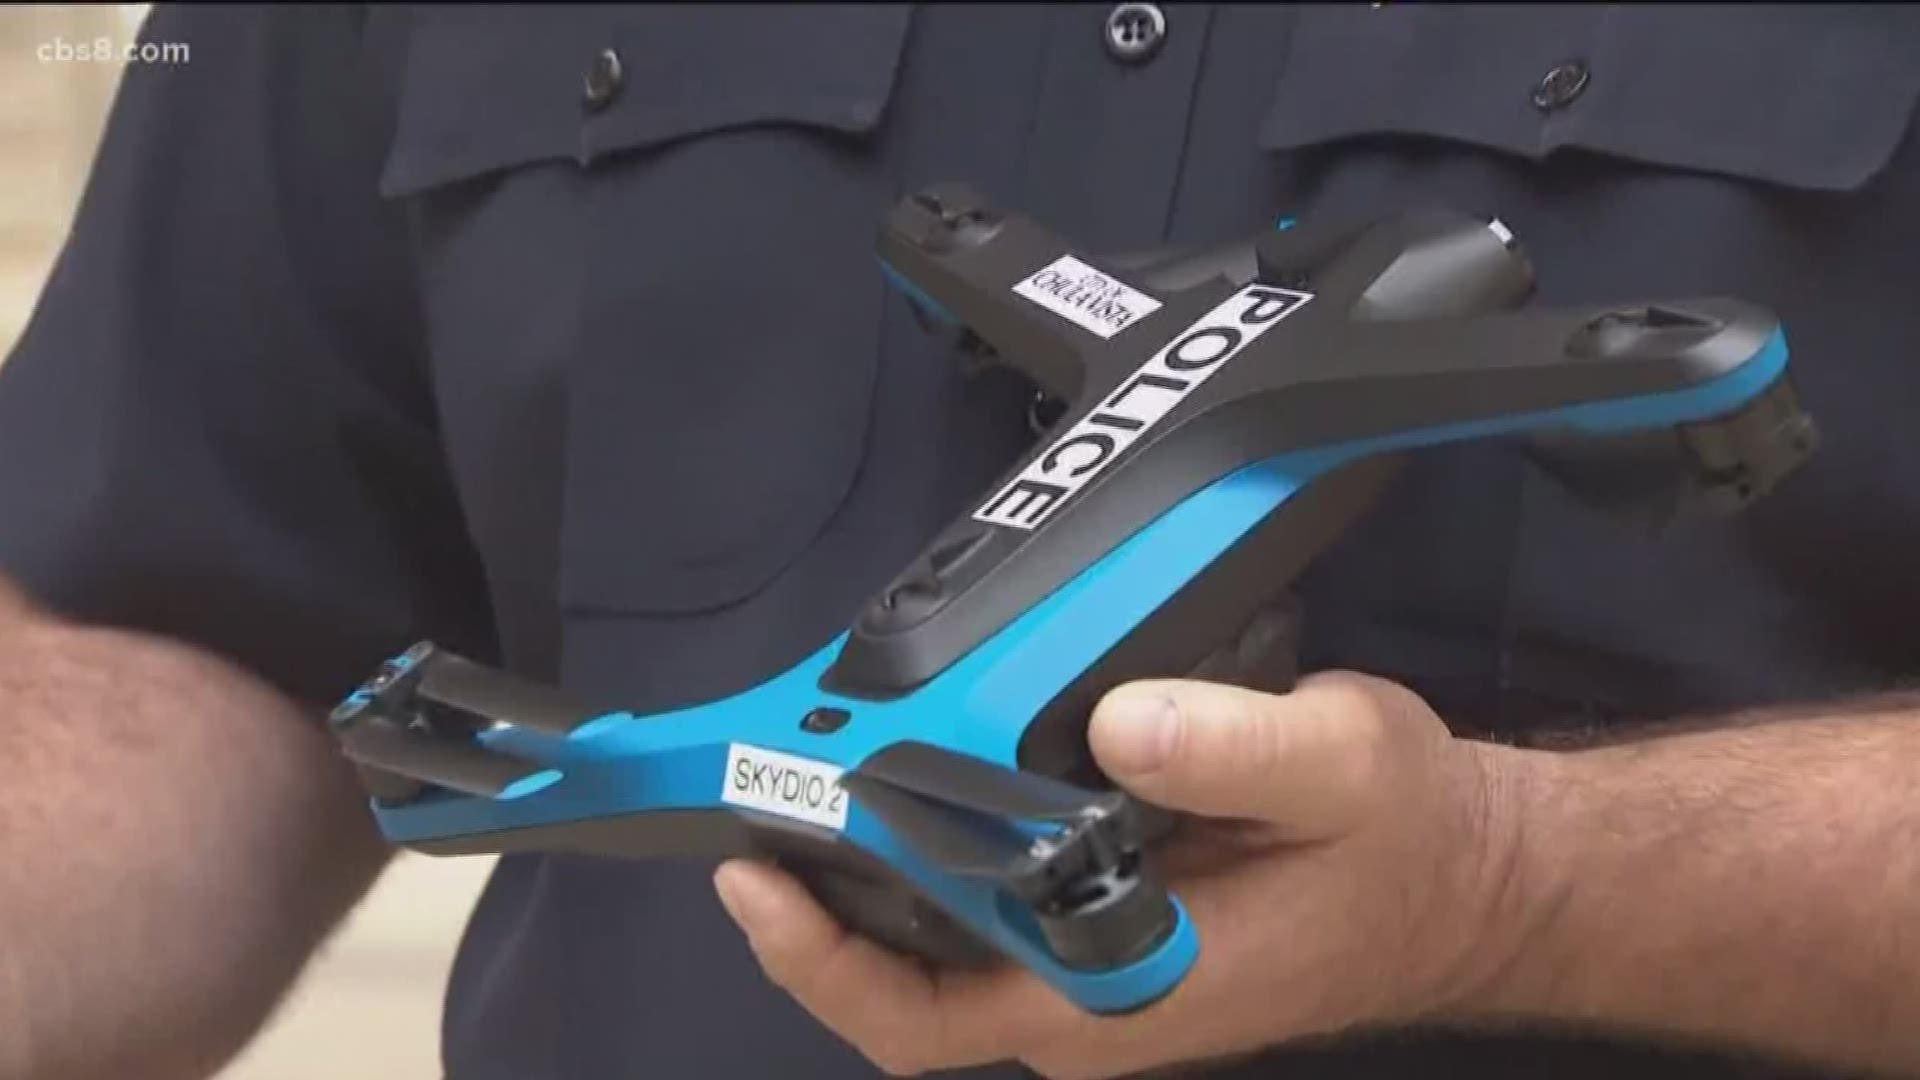 Chula Vista Police Become The First To Use Skydio 2 Drones Cbs8 Com